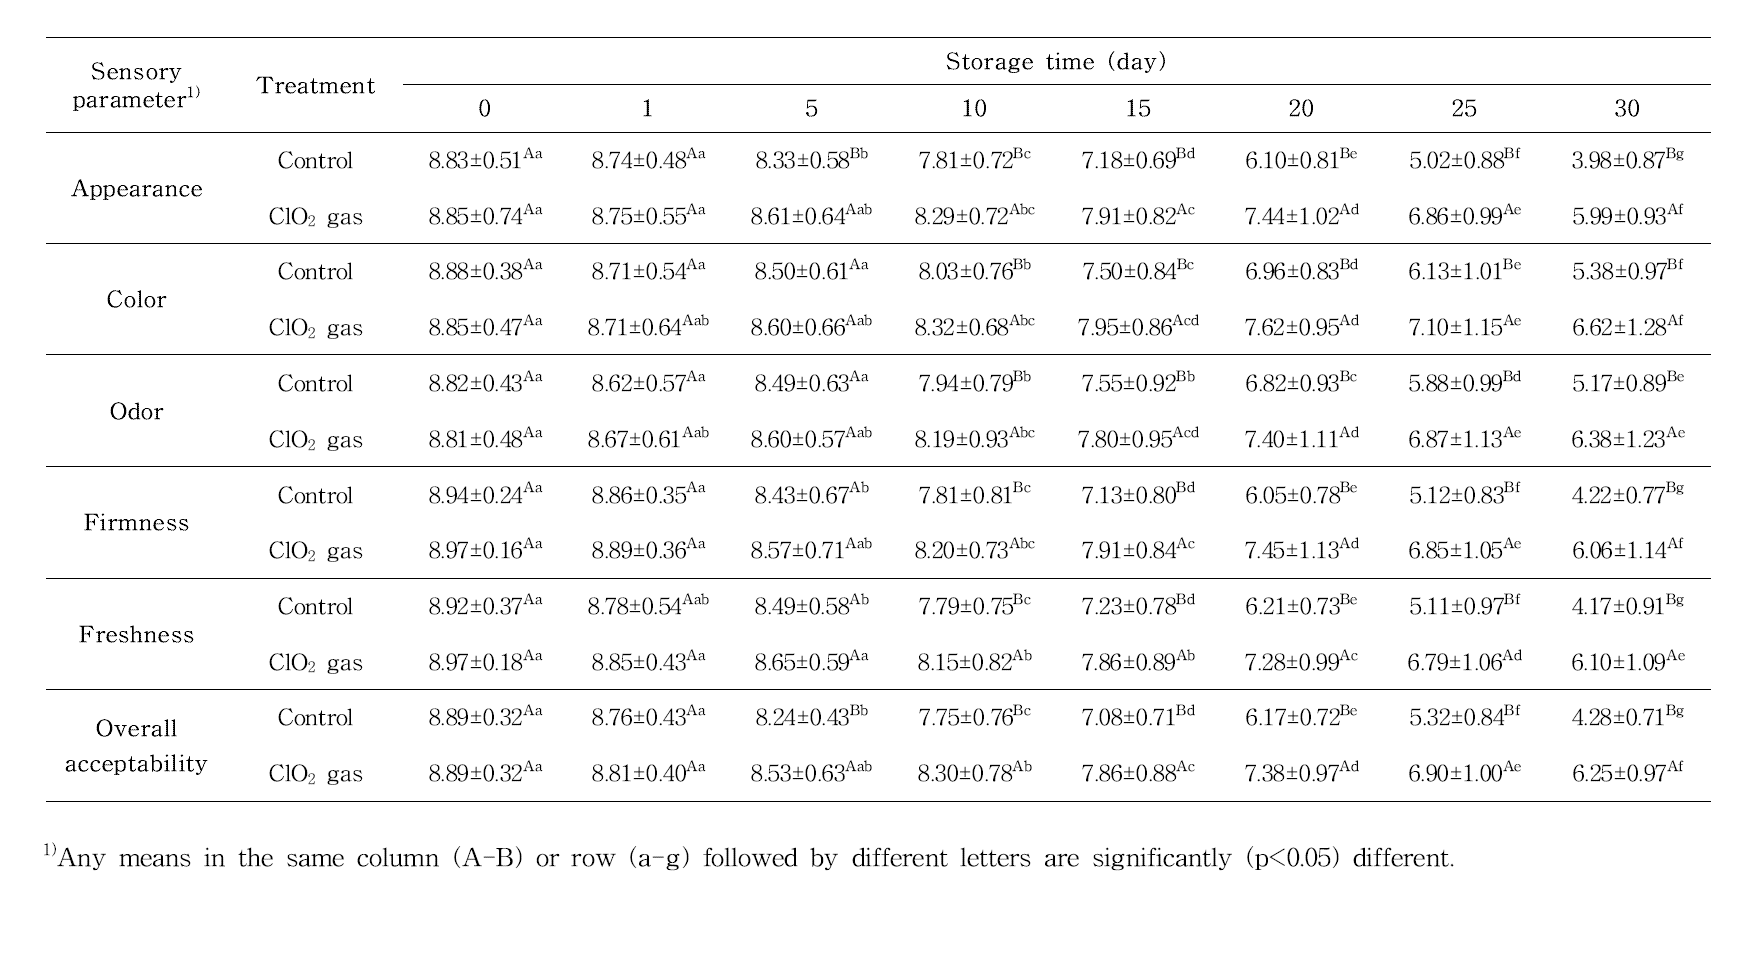 Sensory evaluation in paprika during storage at 8°C, RH 60%